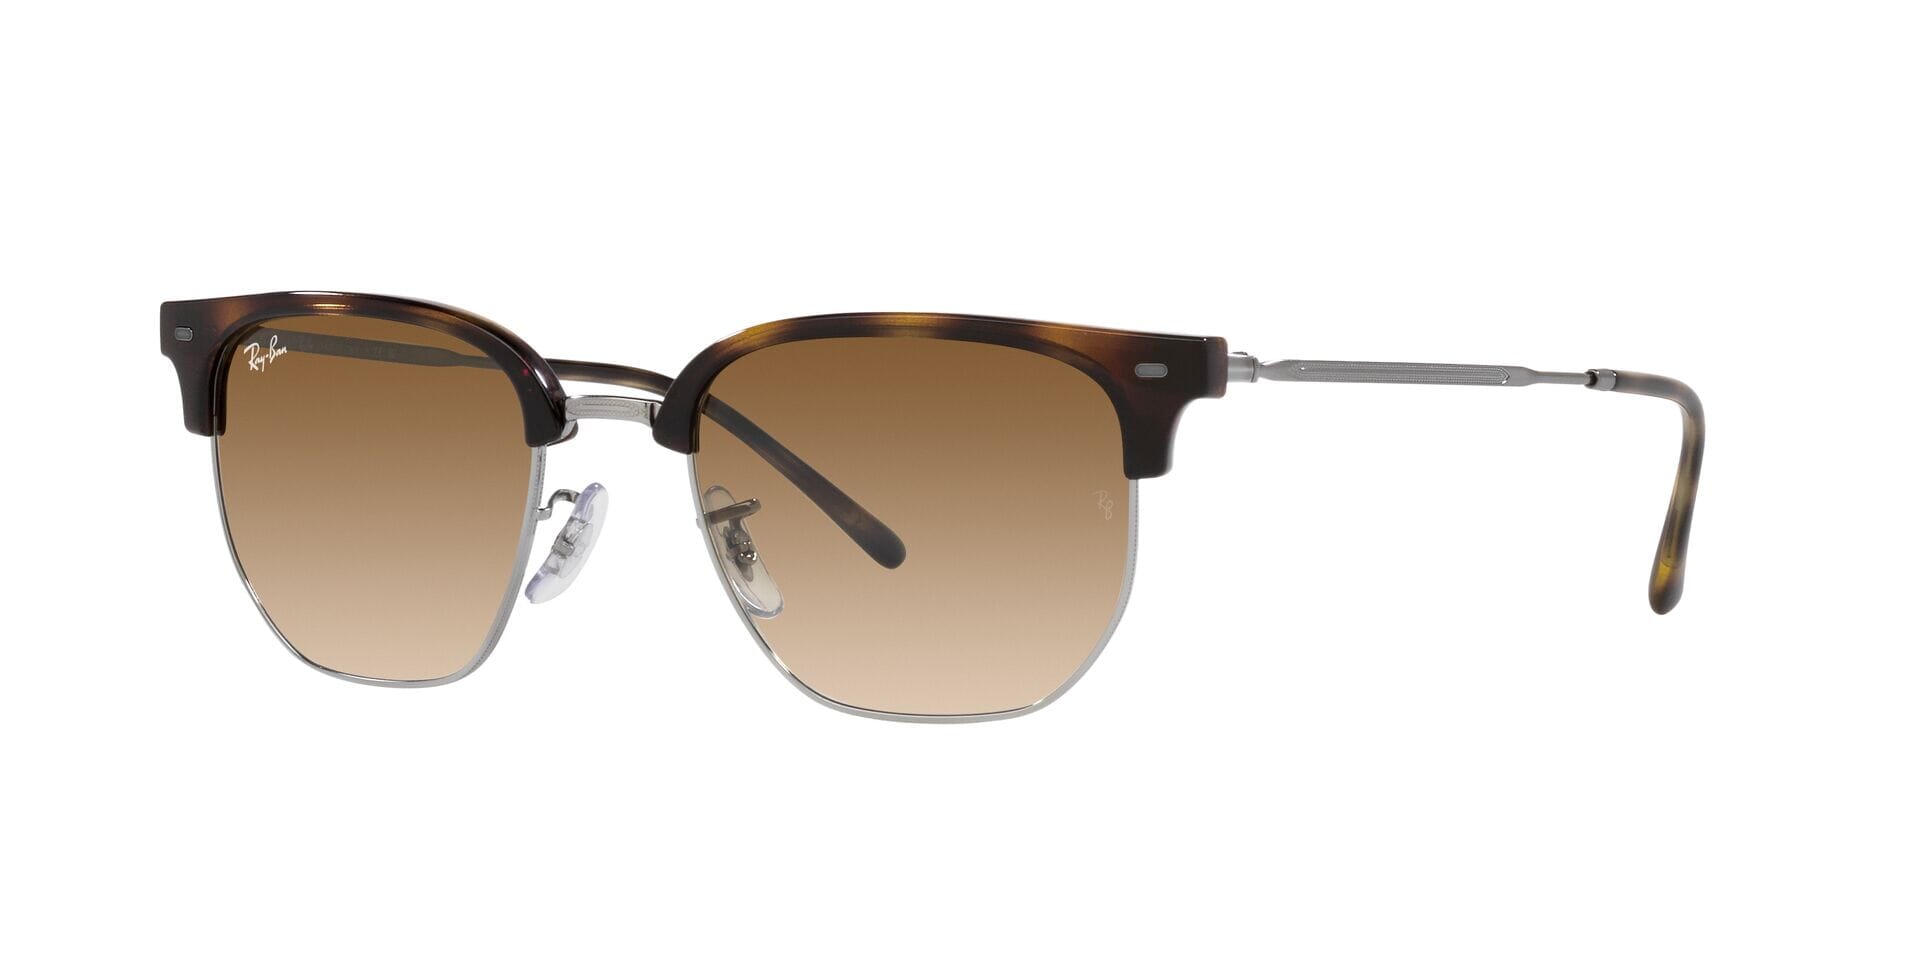 RAY-BAN New Clubmaster Polished Havana - Brown Sunglasses